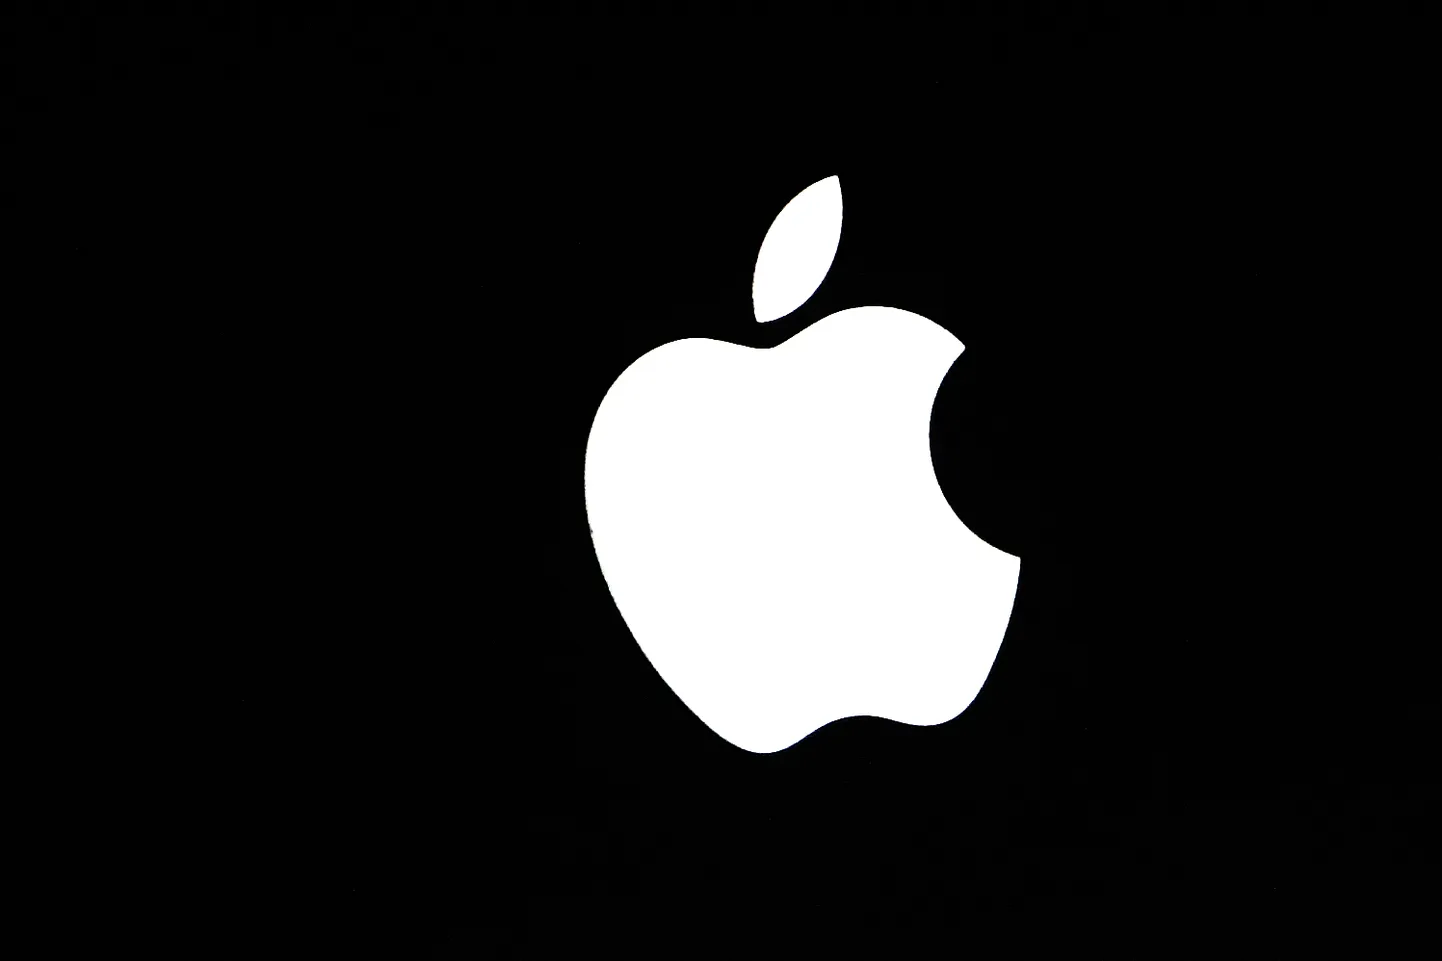 ASV informāciju tehnoloģiju giganta "Apple" logotips.